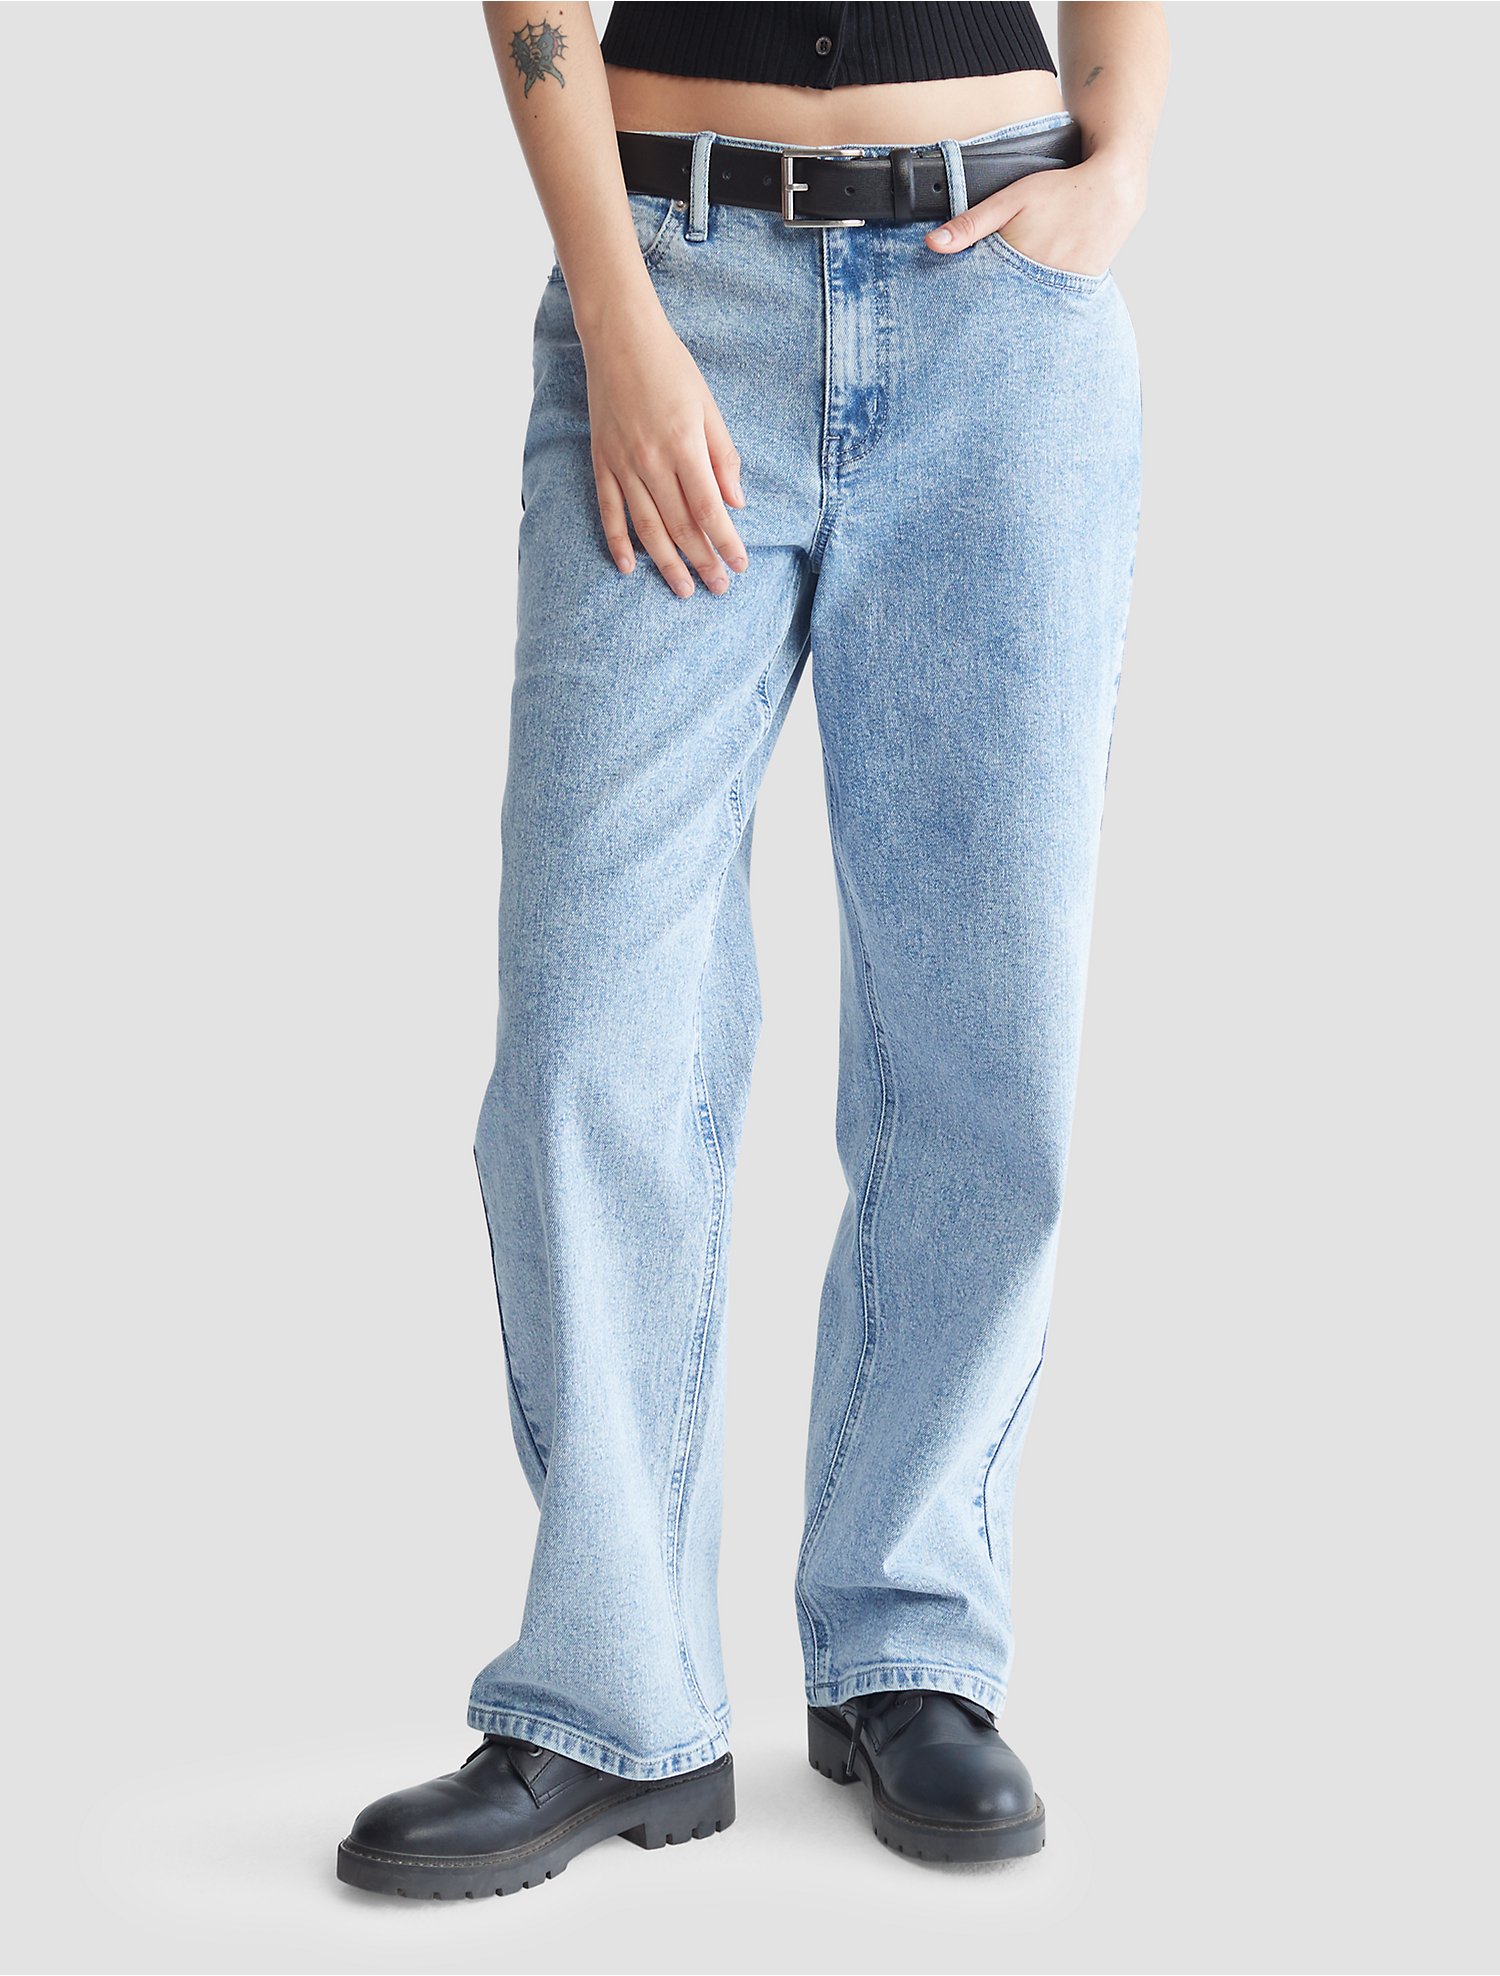 Introducir 53+ imagen calvin klein high rise 90s fit jeans